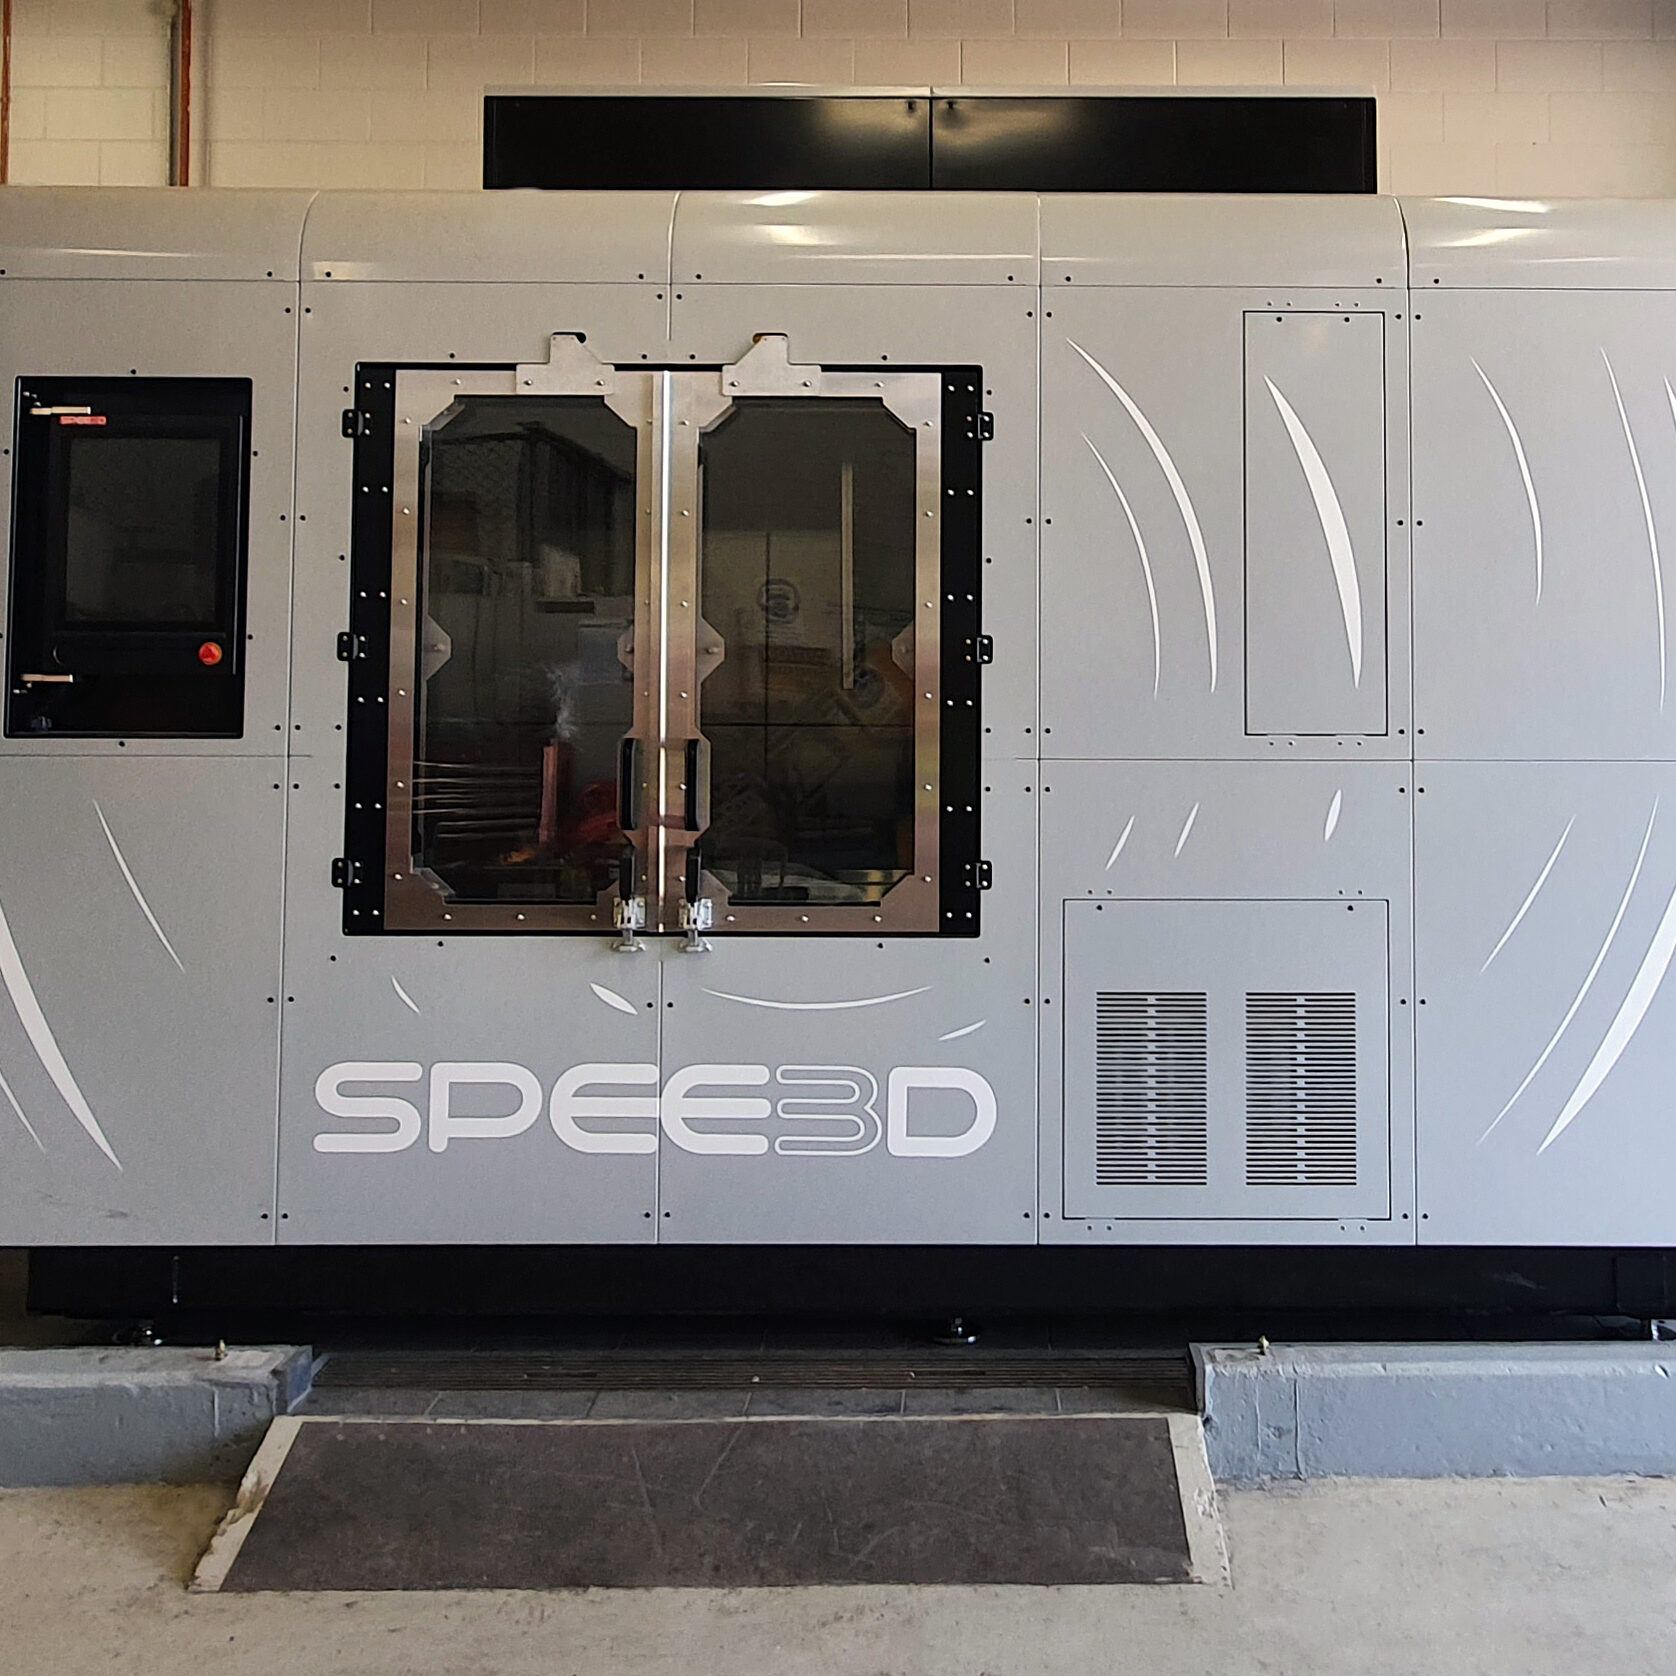 The WarpSPEE3D printer installed at Navy headquarters in Australia.